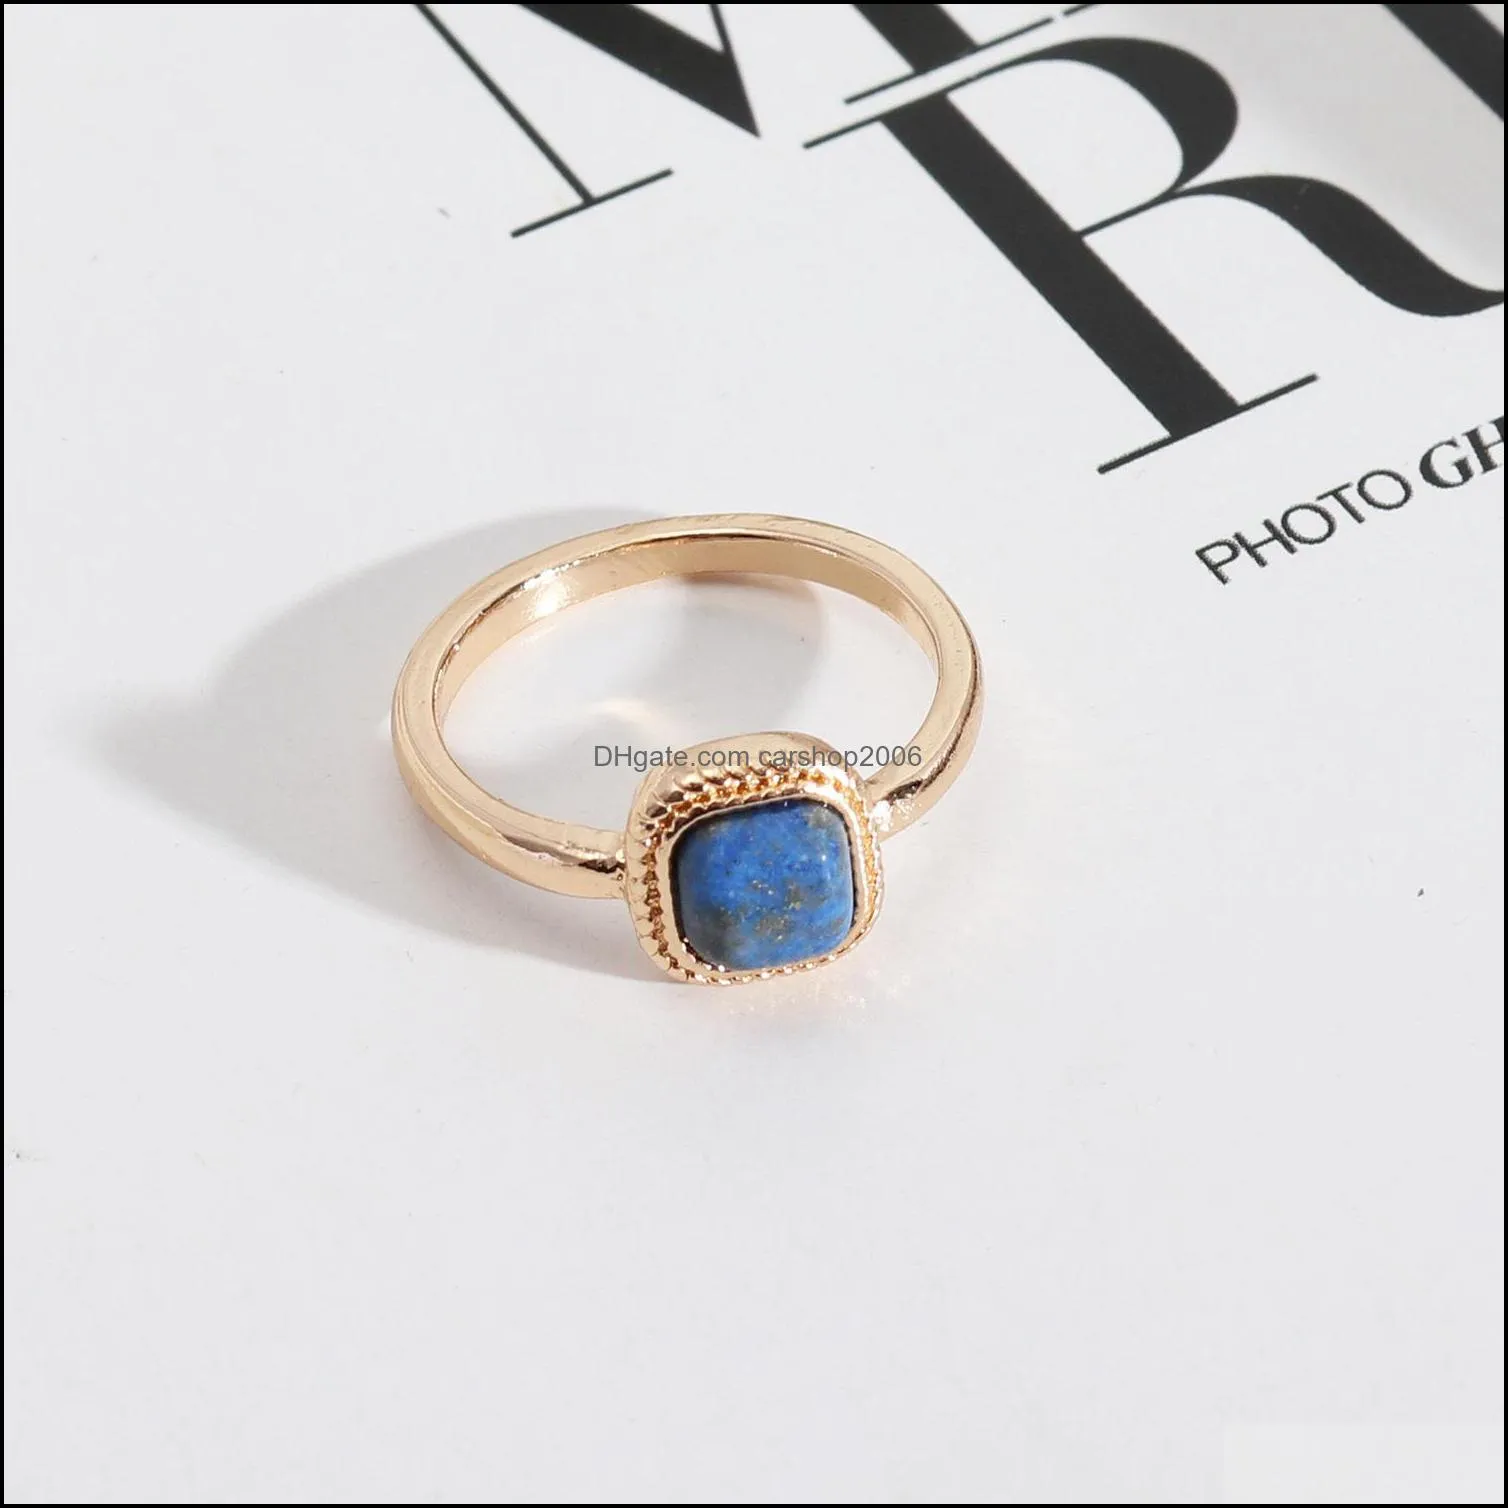 mini square stone rings lapis lazuli amethysts rose quartz stone fashion inner dia 17mm gold color band jewelry for women carshop2006